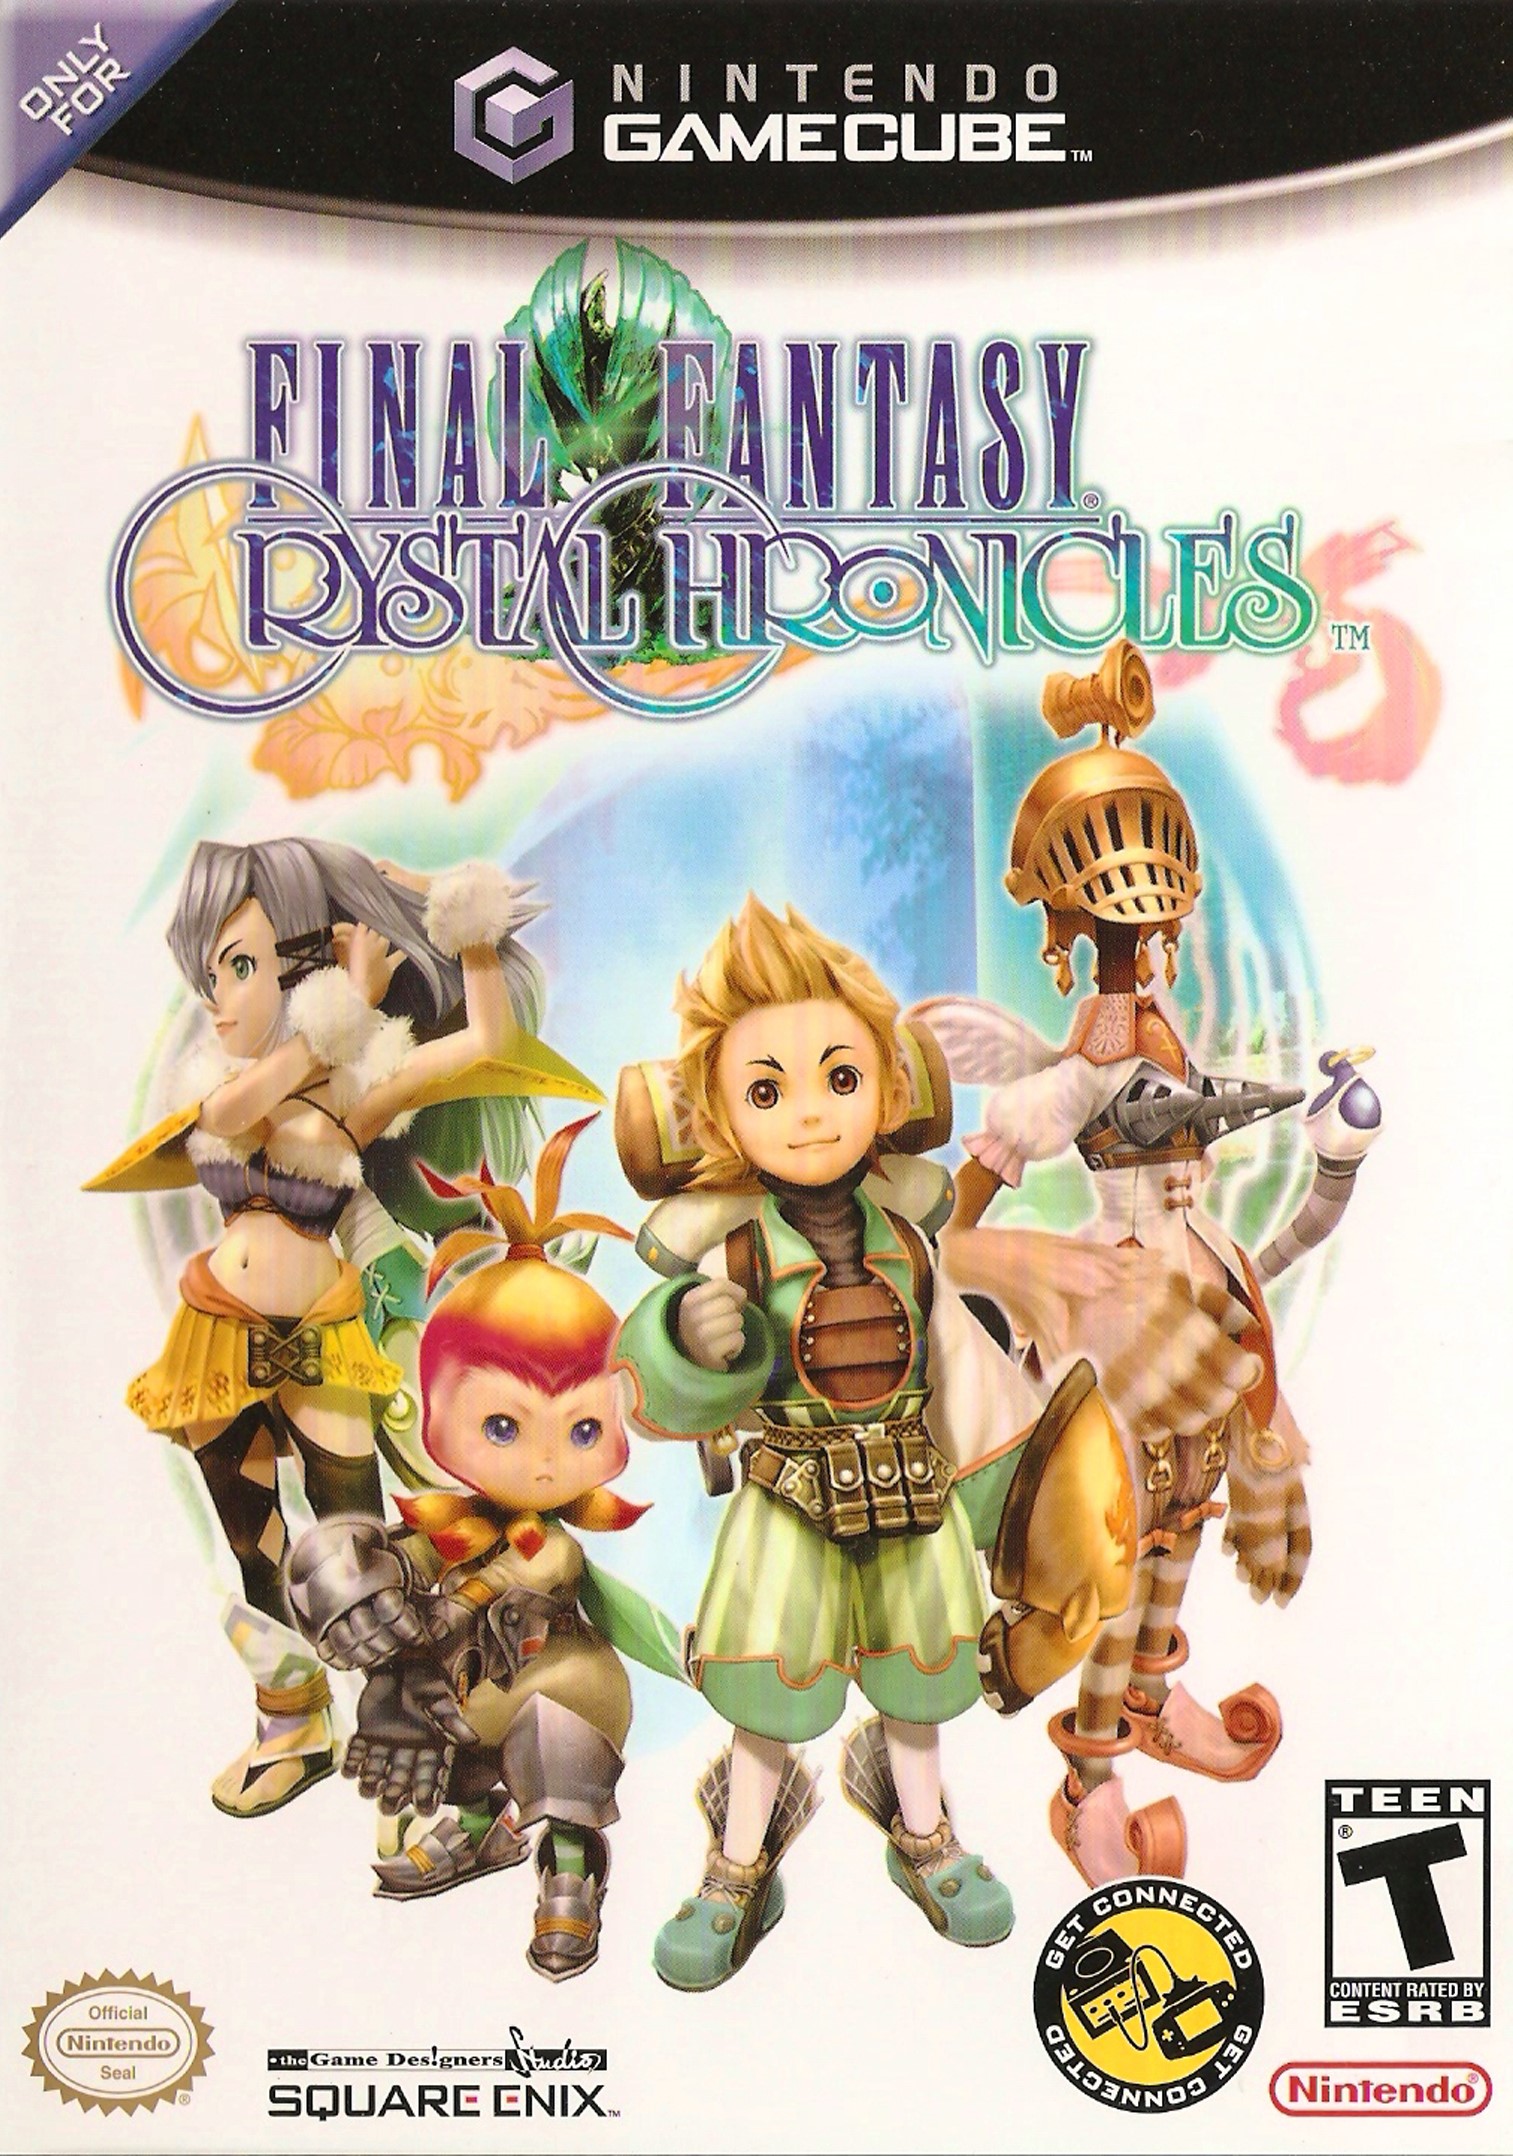 'Final Fantasy: Crystal Chronicles'